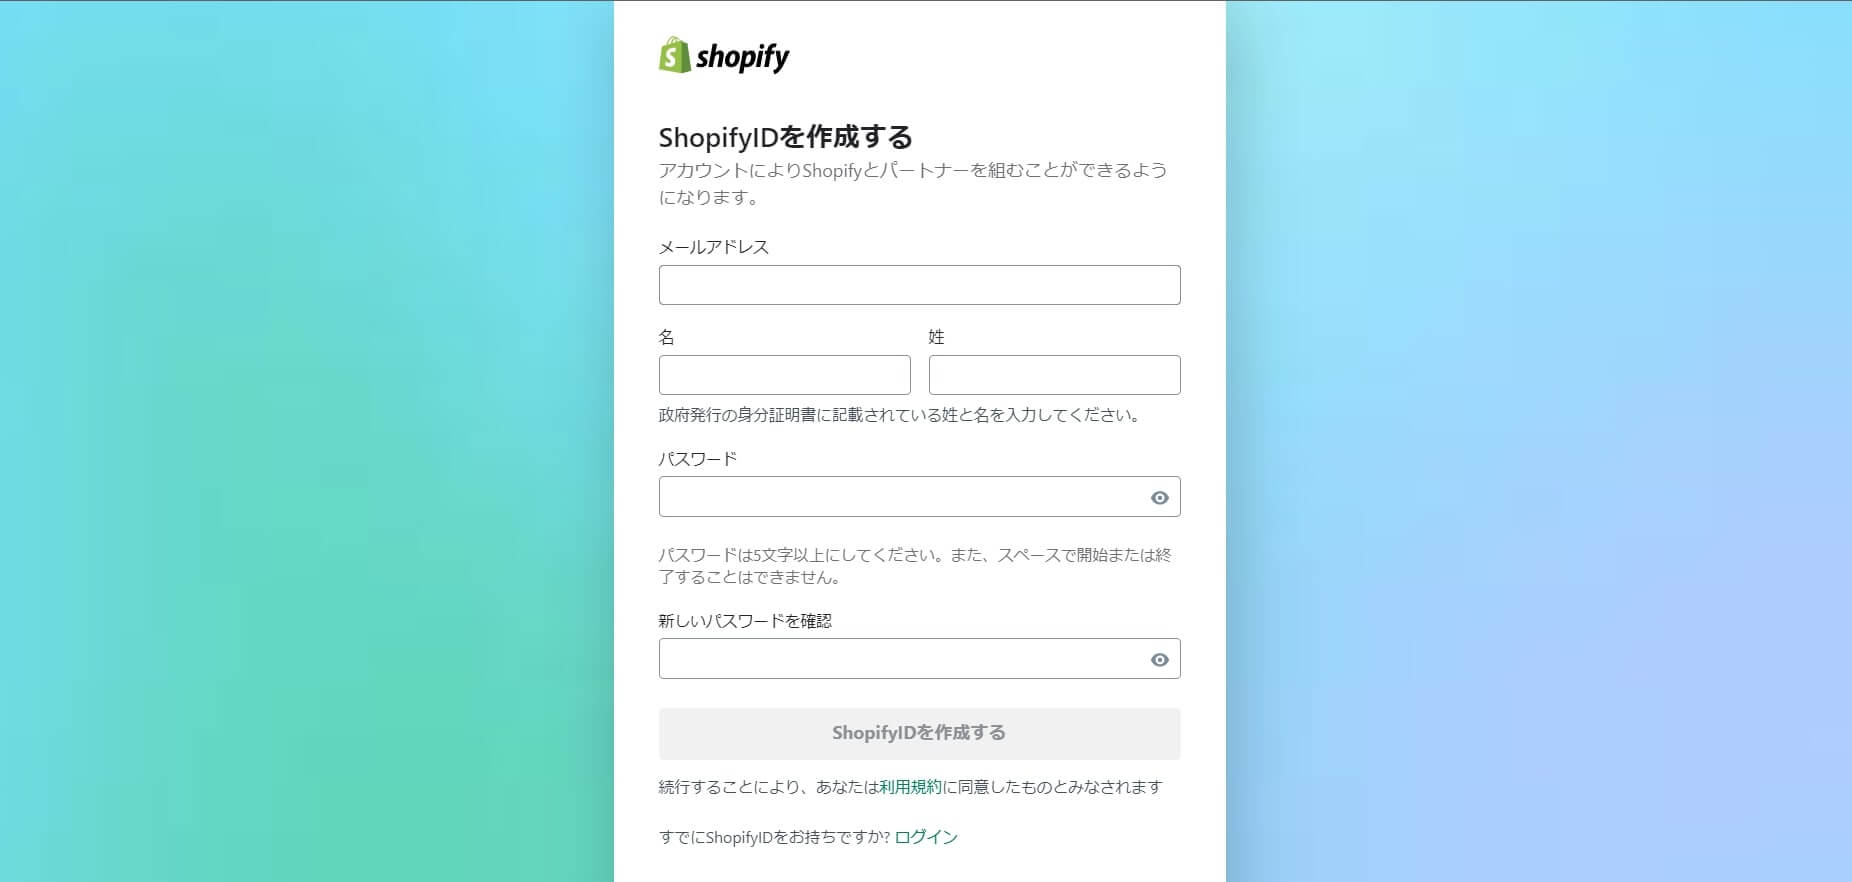 Step②Shopify IDを作成する